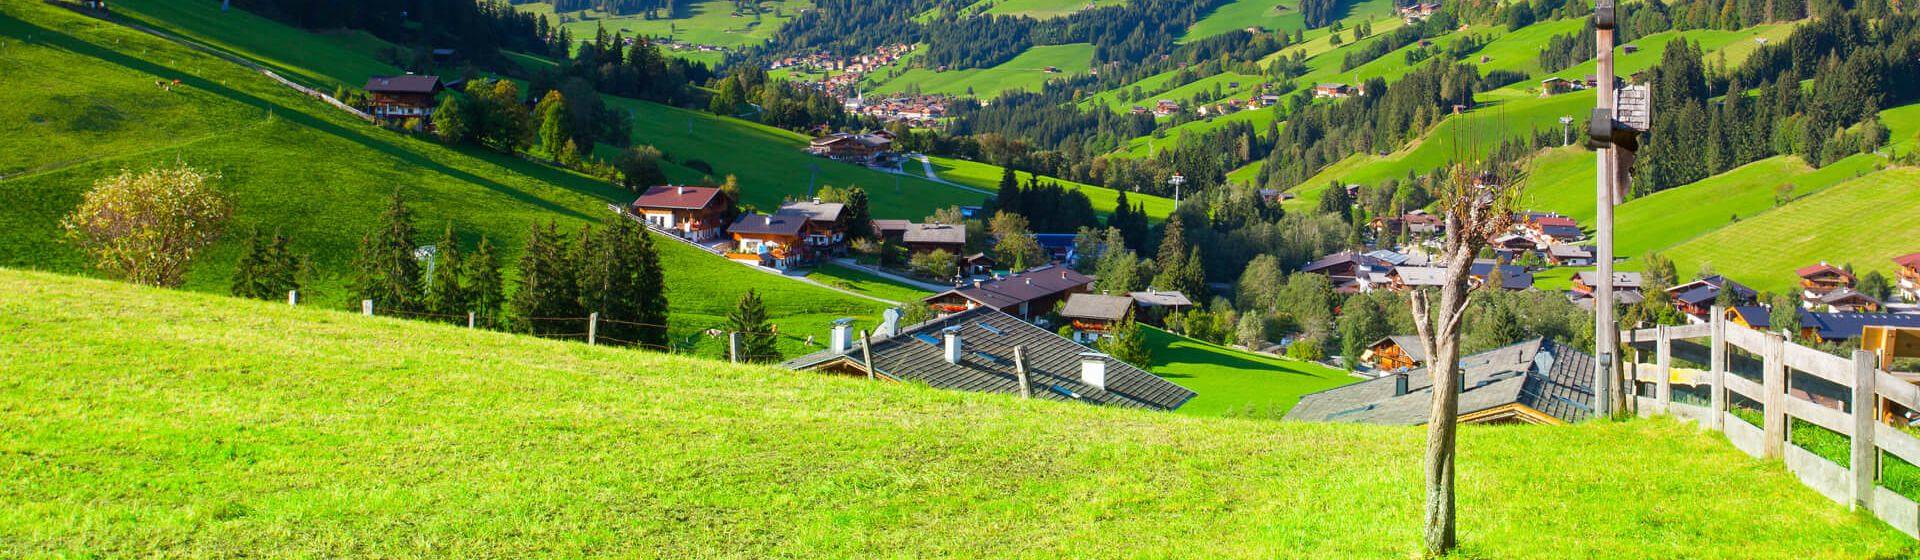 Holidays to Alpbach Image